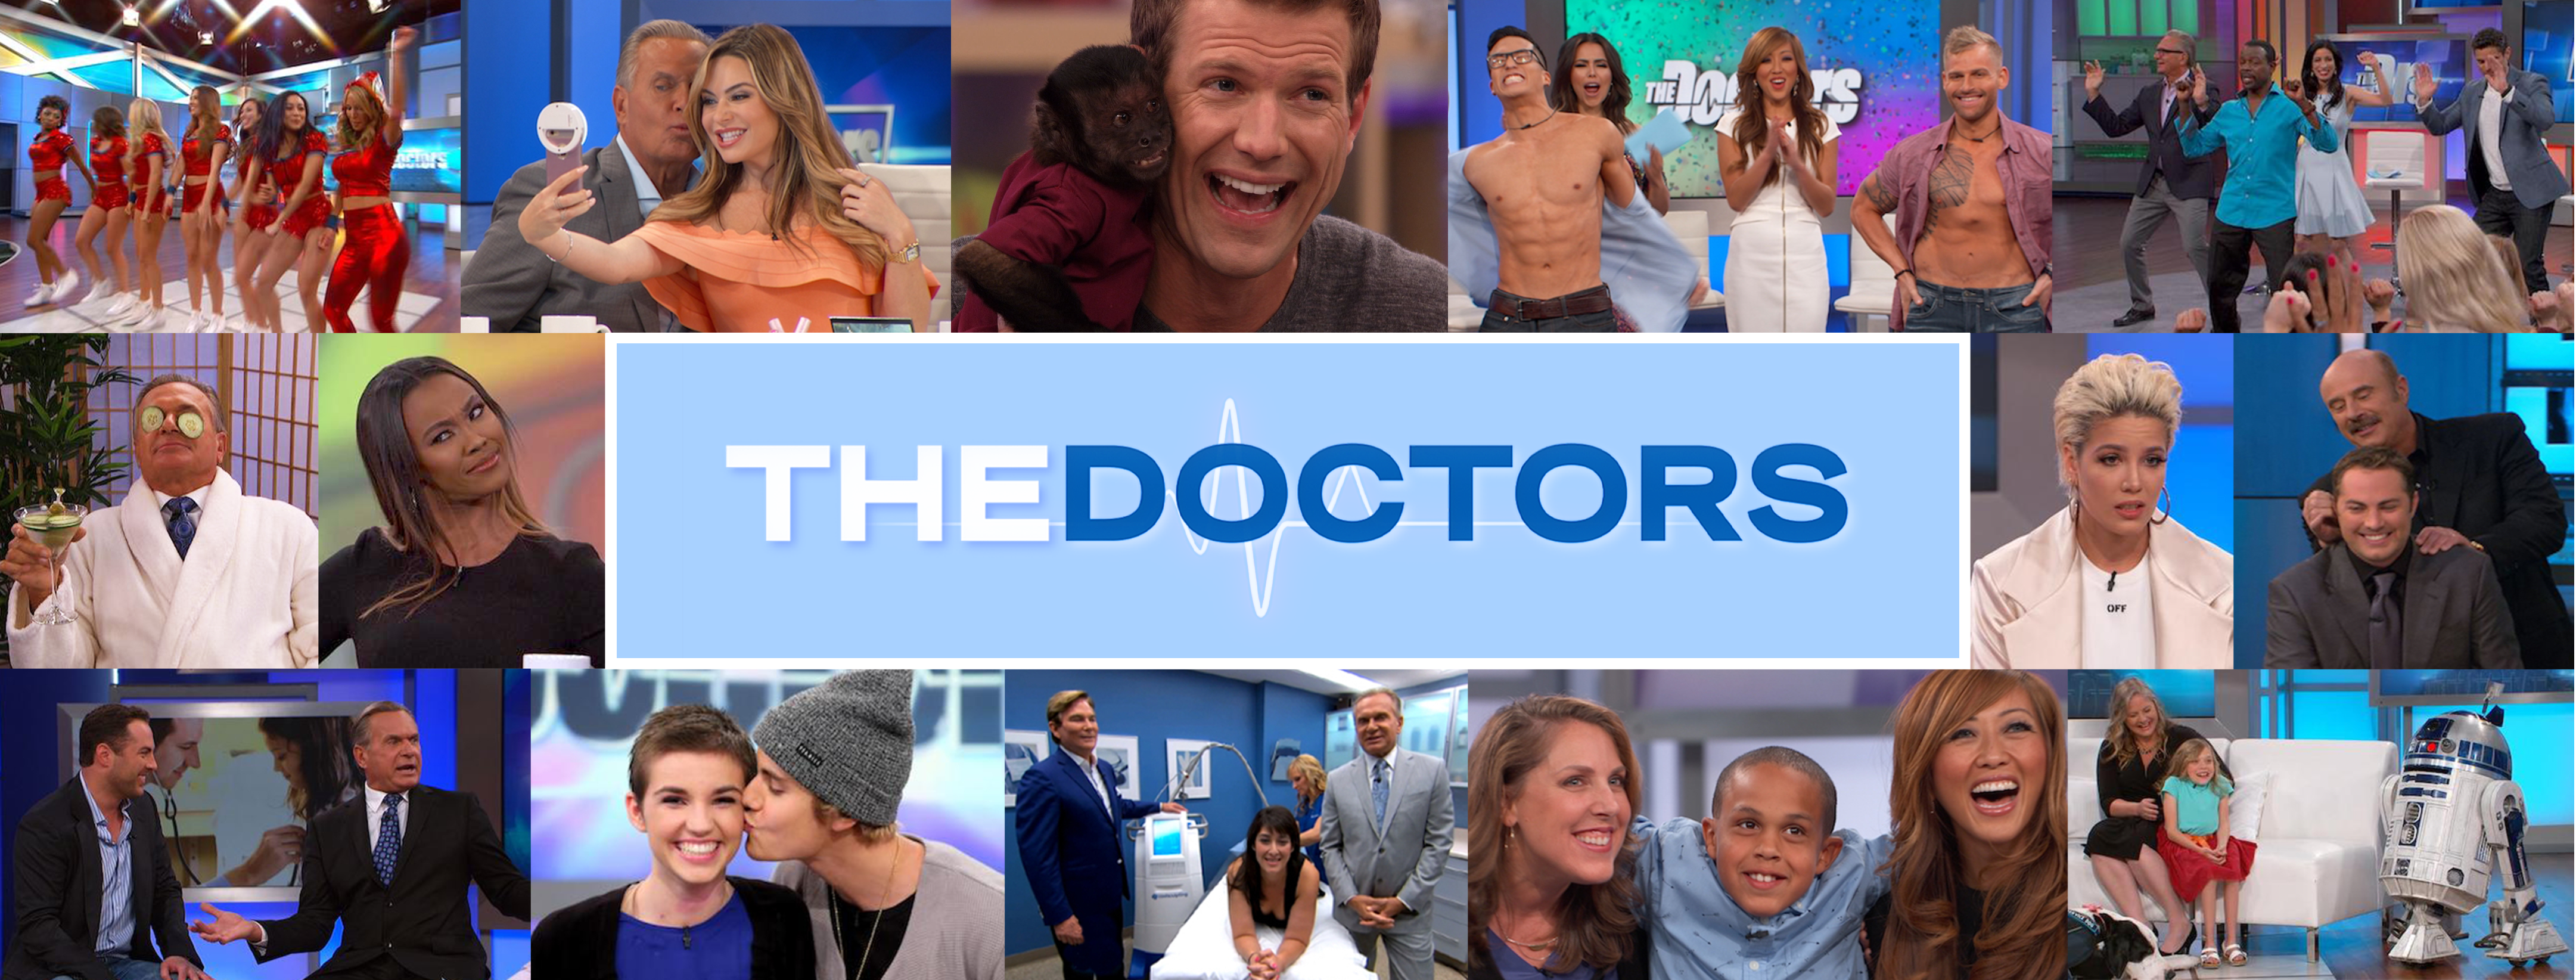 Ear Infection Tweet The Doctors Tv Show